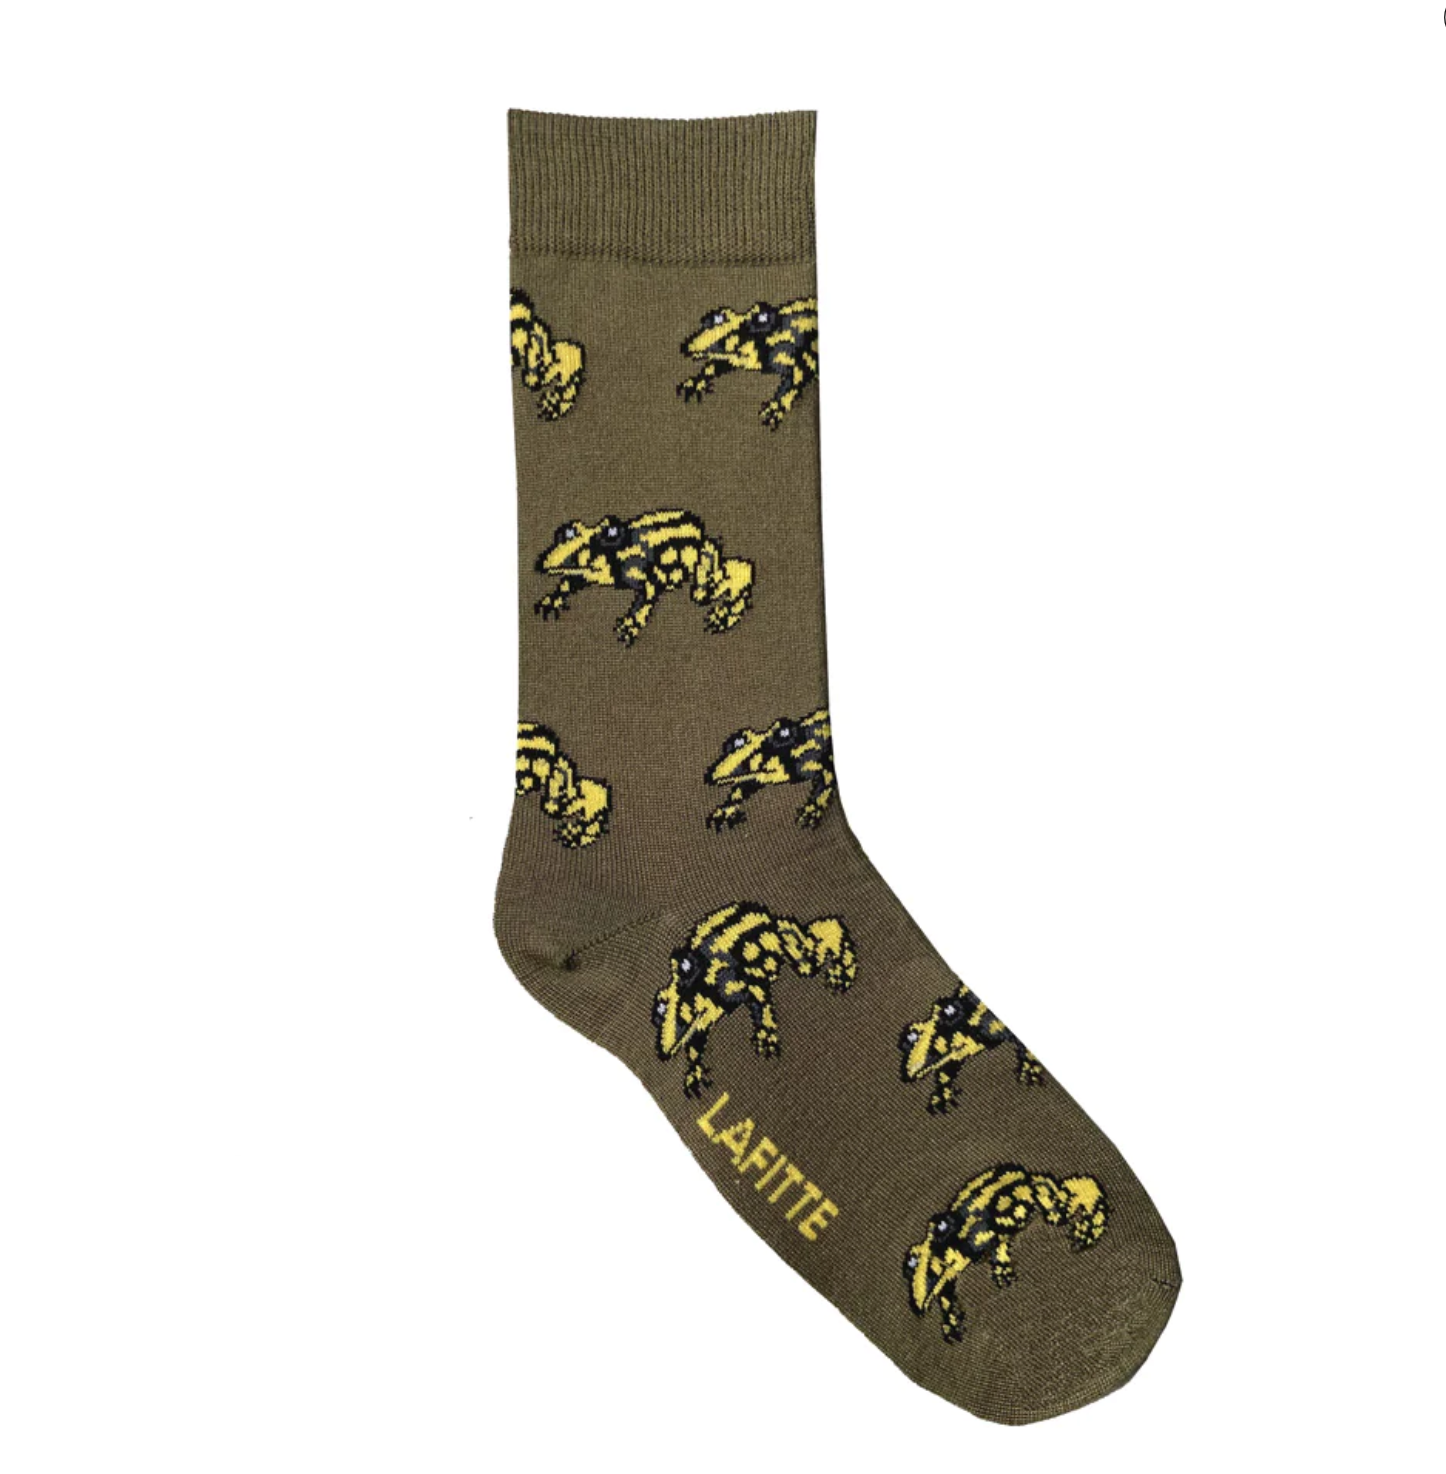 Corroboree Frog Bamboo Crew Socks in khaki - The Sockey